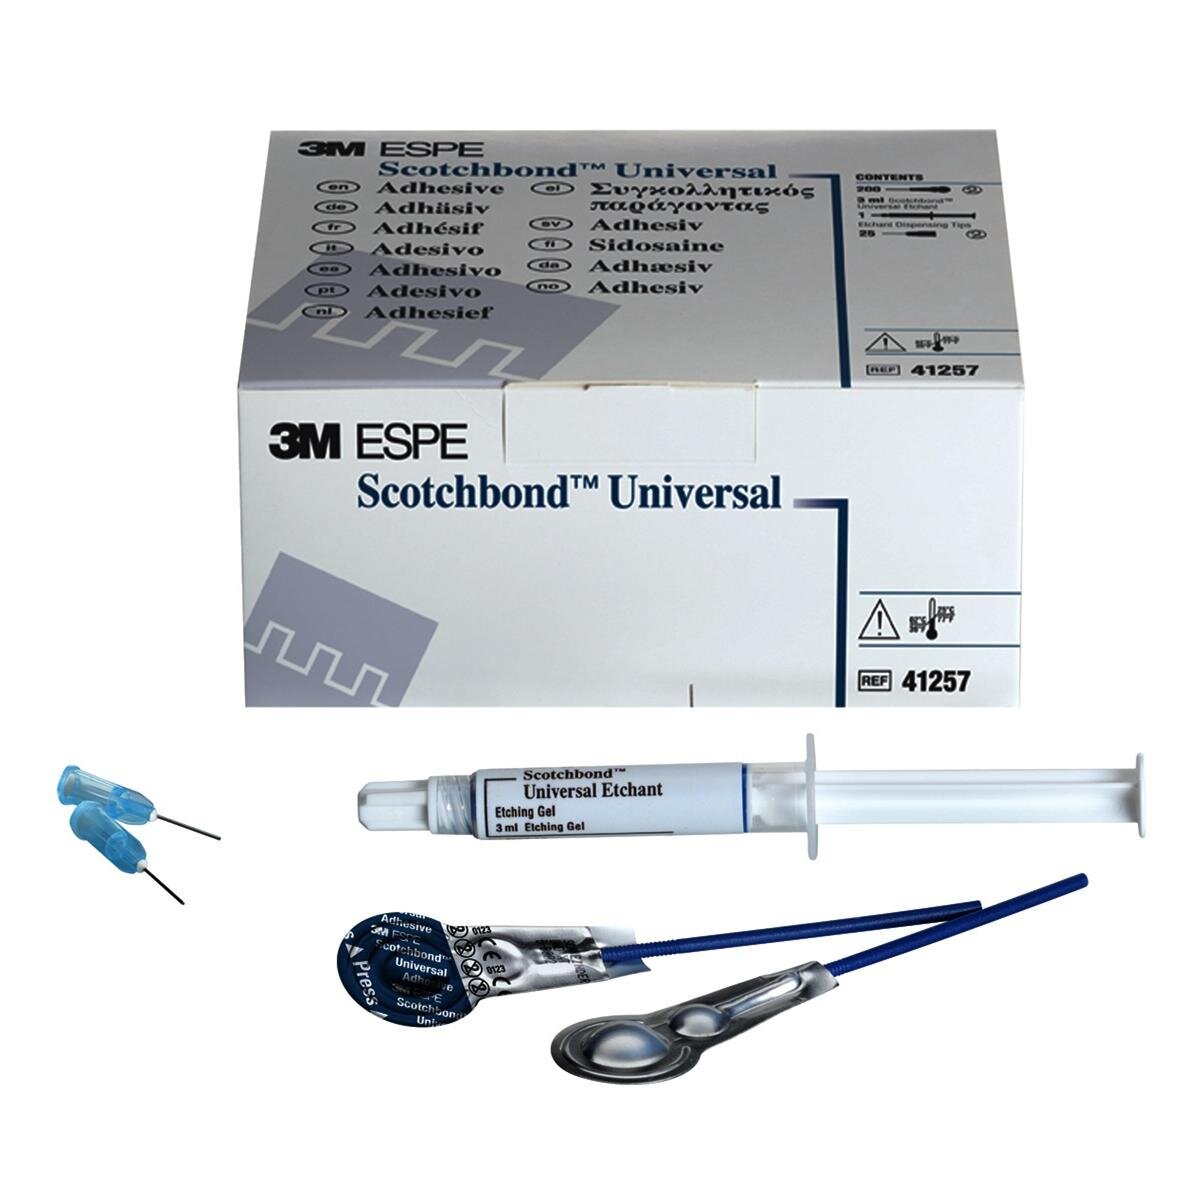 3M ESPE Scotchbond Universal Adhesive Bulk Pack (200 Unit-Dose Applicators)